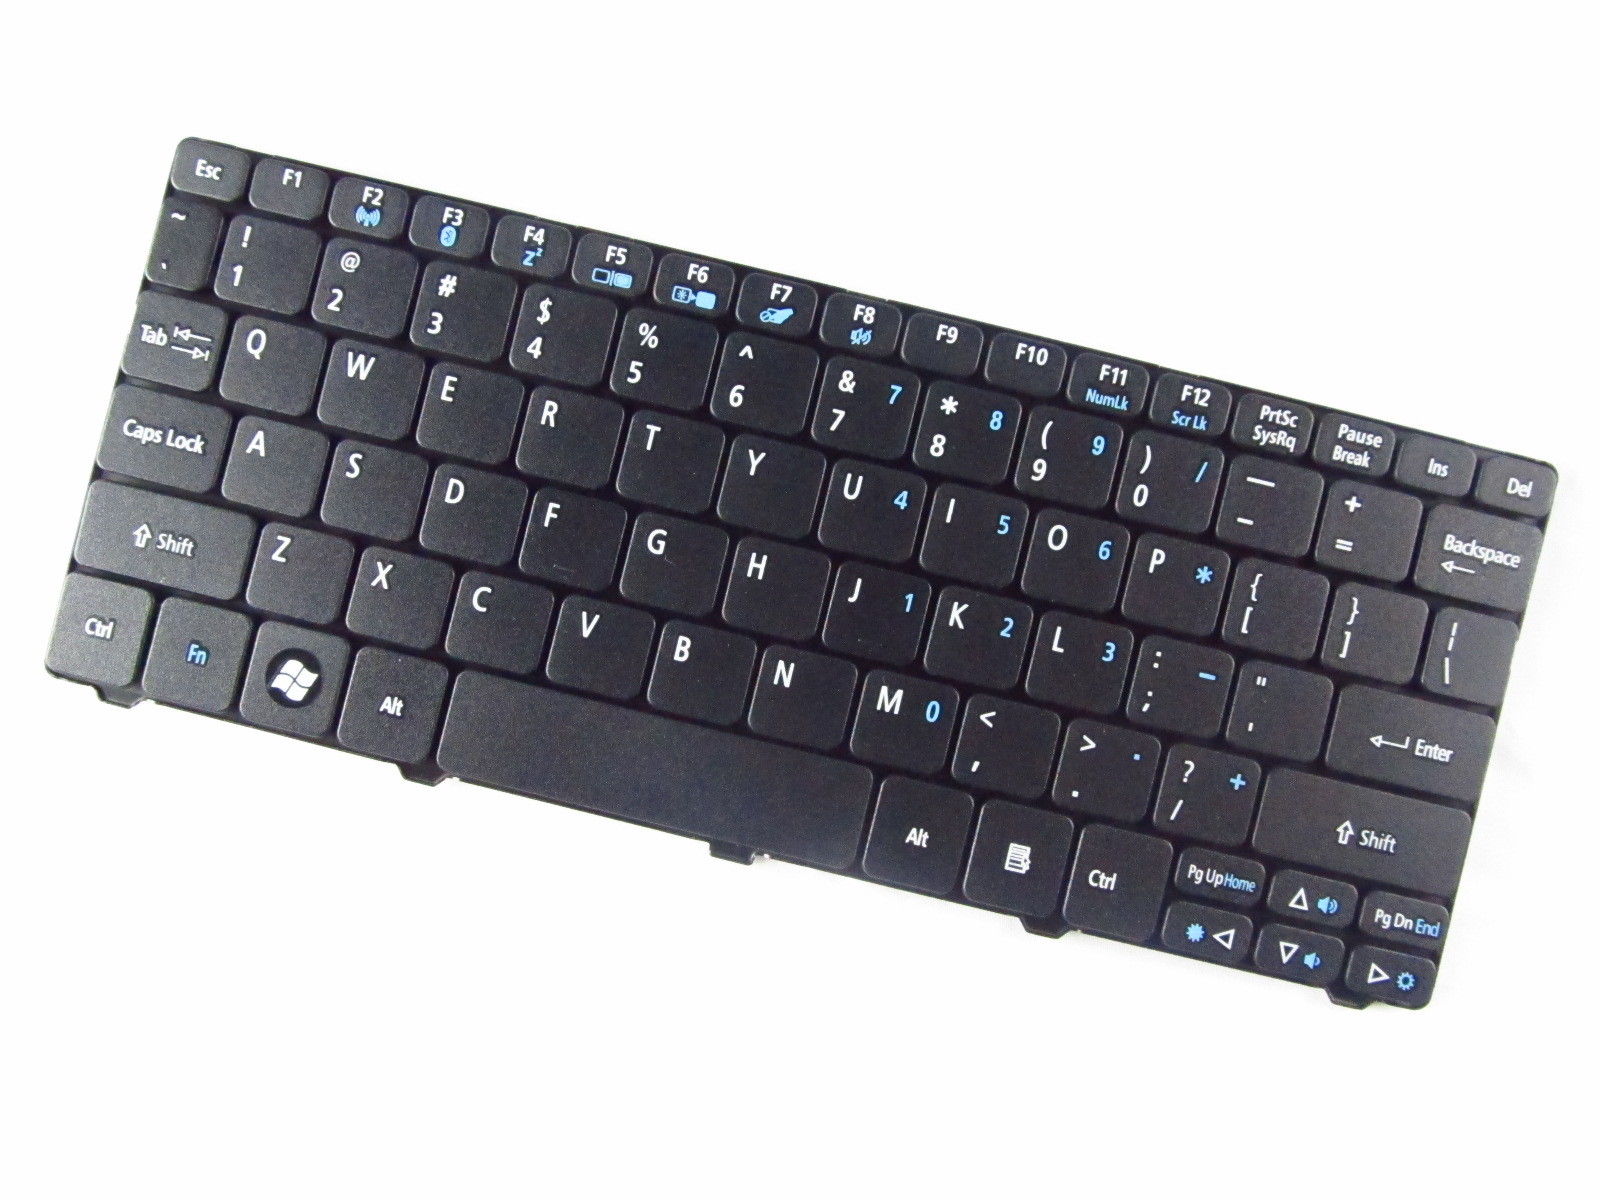 Asus Laptop Keyboard Repair/replacement in chennai